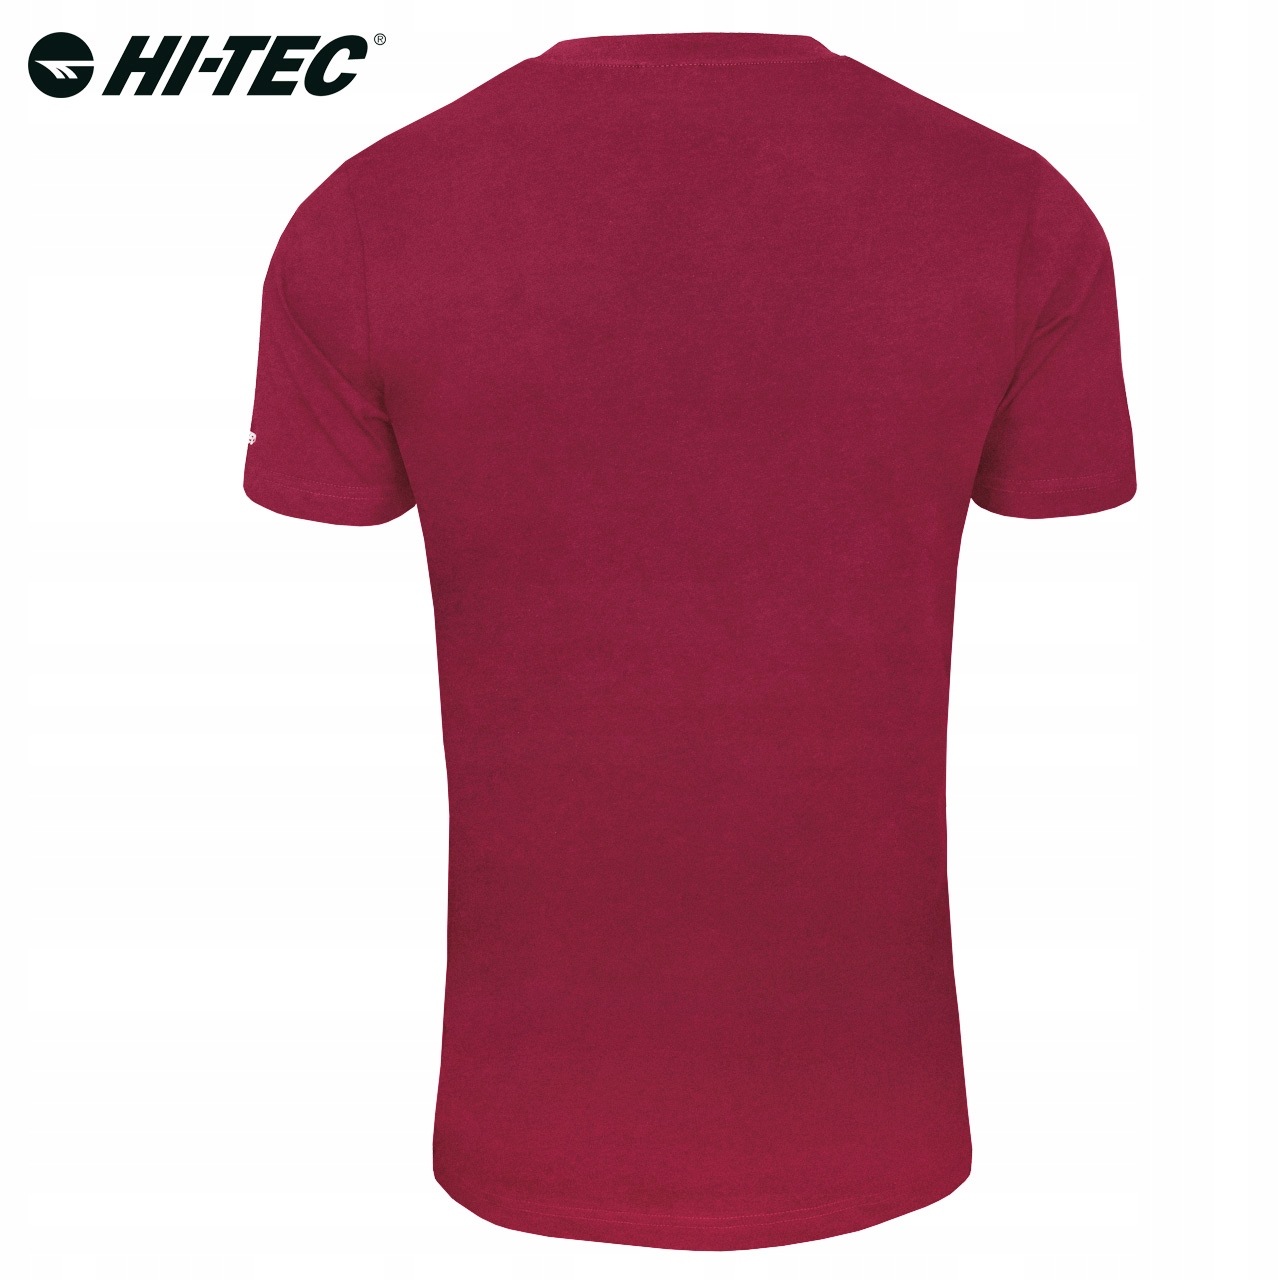 Koszulka Męska LORE HI-TEC T-Shirt Bawełniana Podkoszulek Bordowa XL Kolekcja Militaria/Outdoor